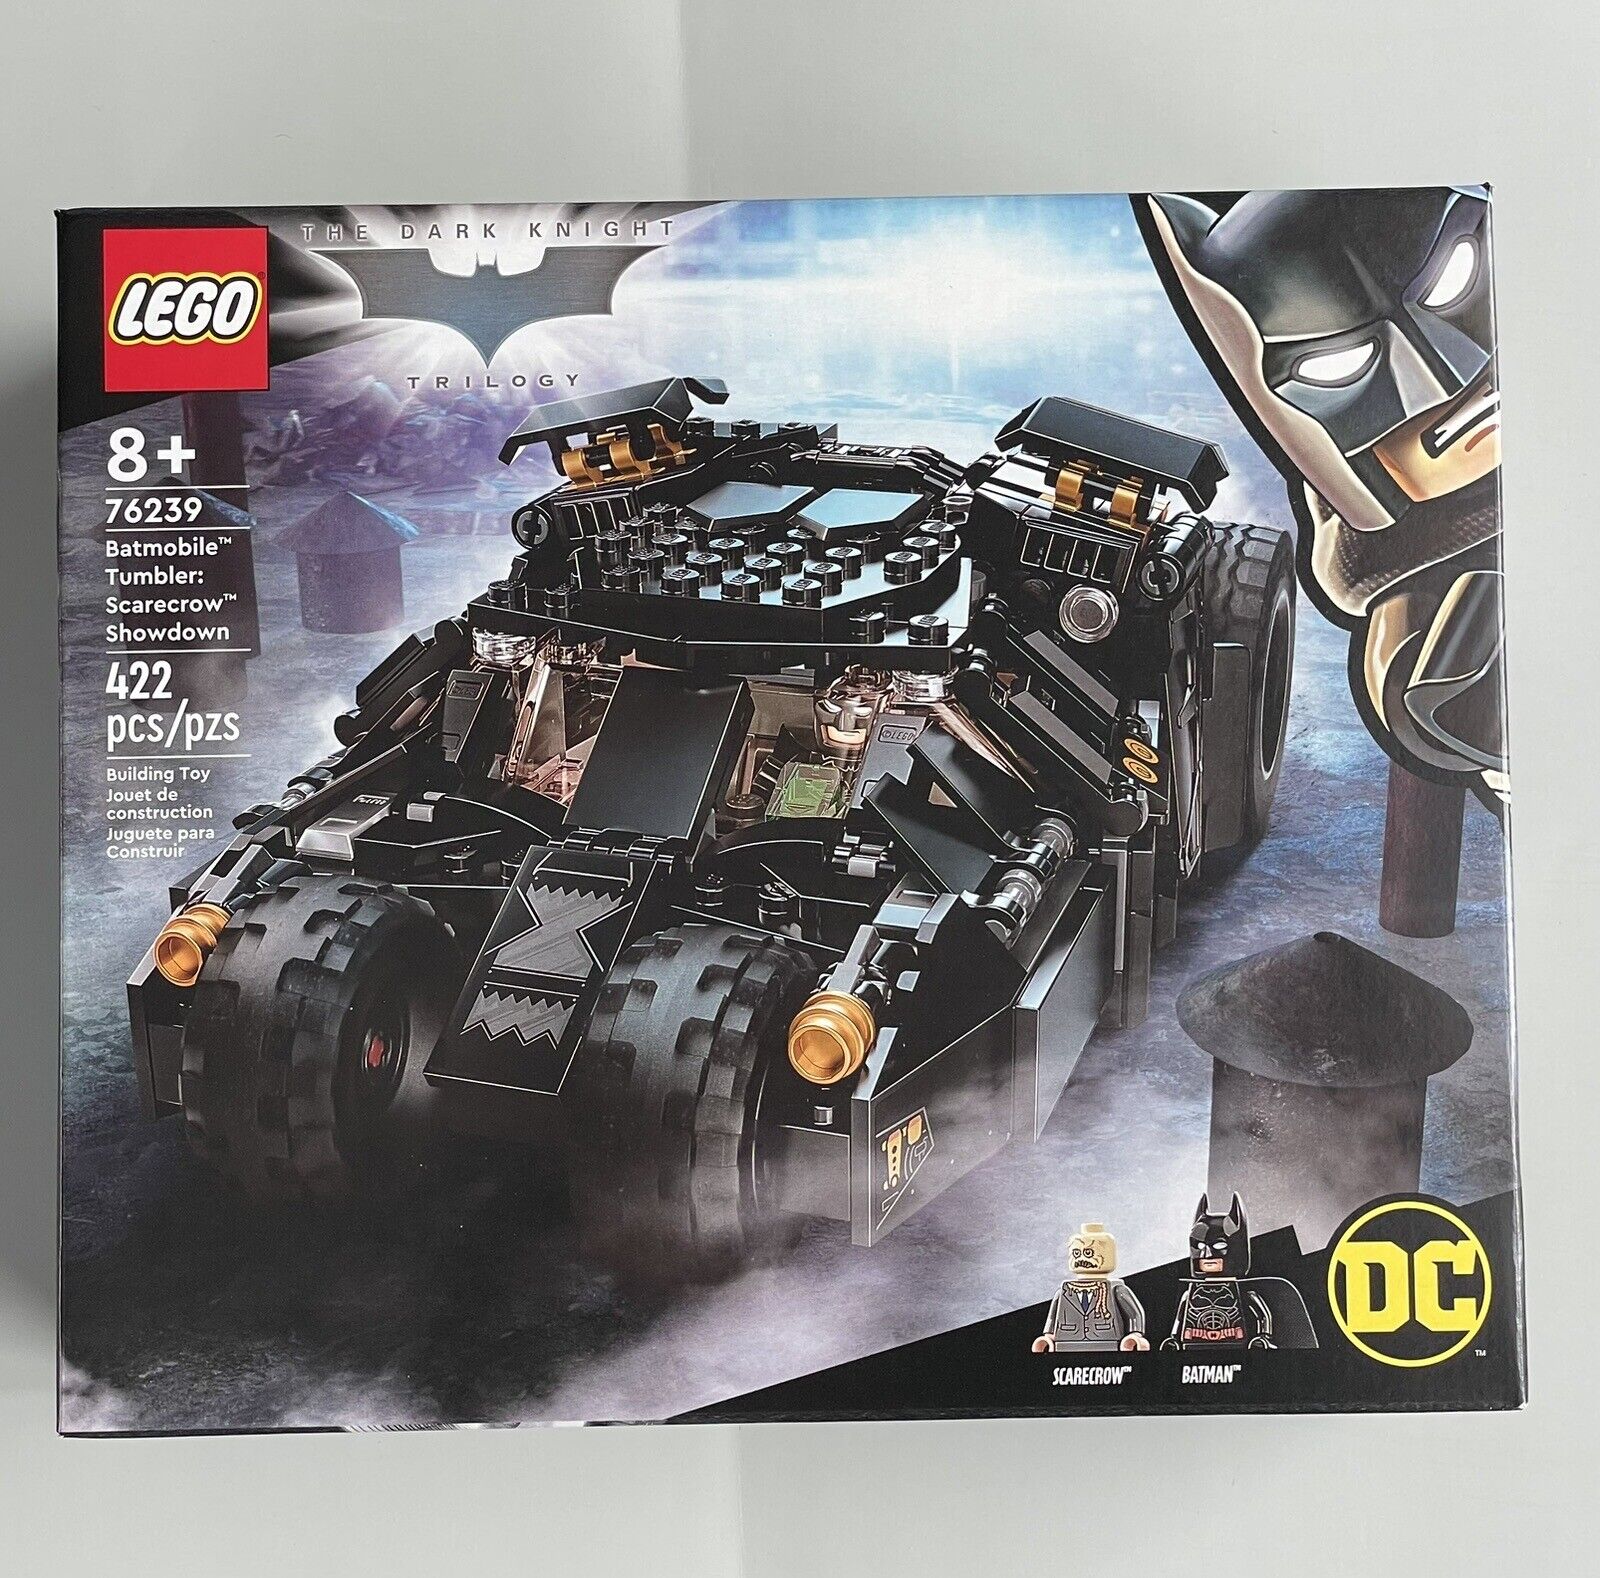 LEGO Batman The Dark Knight Trilogy Batmobile Tumbler Scarecrow Showdown #76239